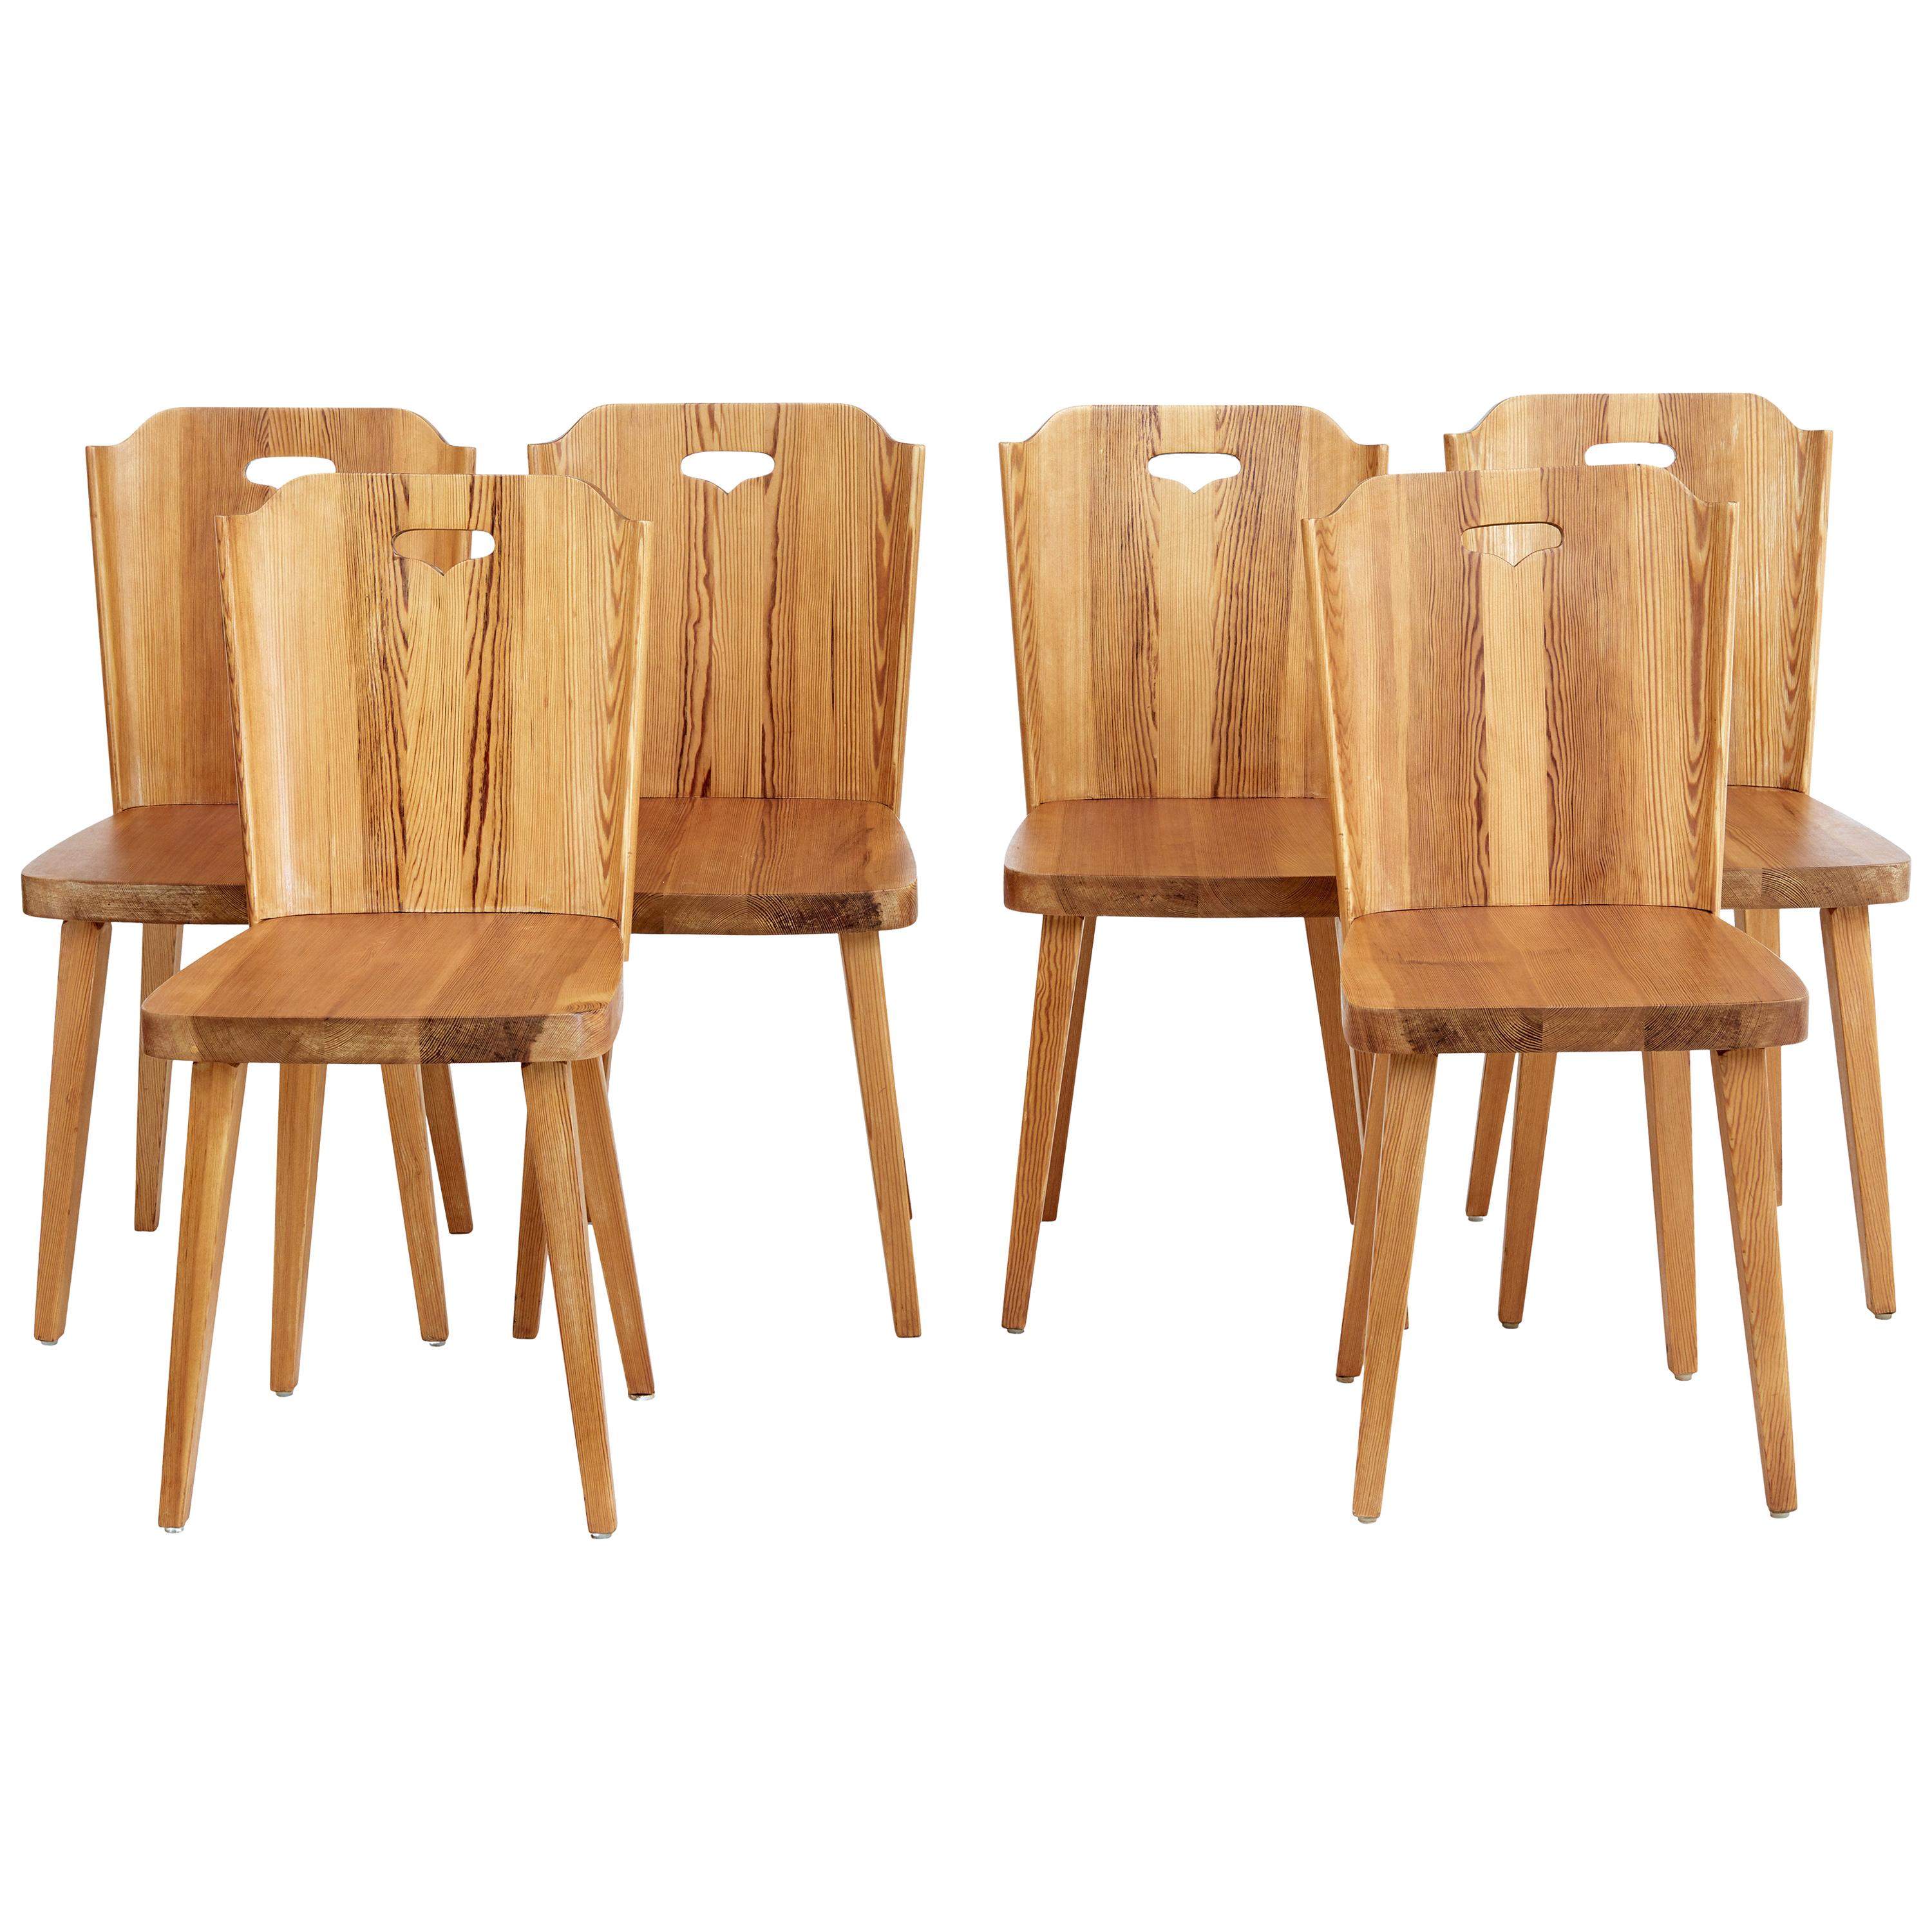 Set of 6 1960s Swedish Pine Dining Chairs